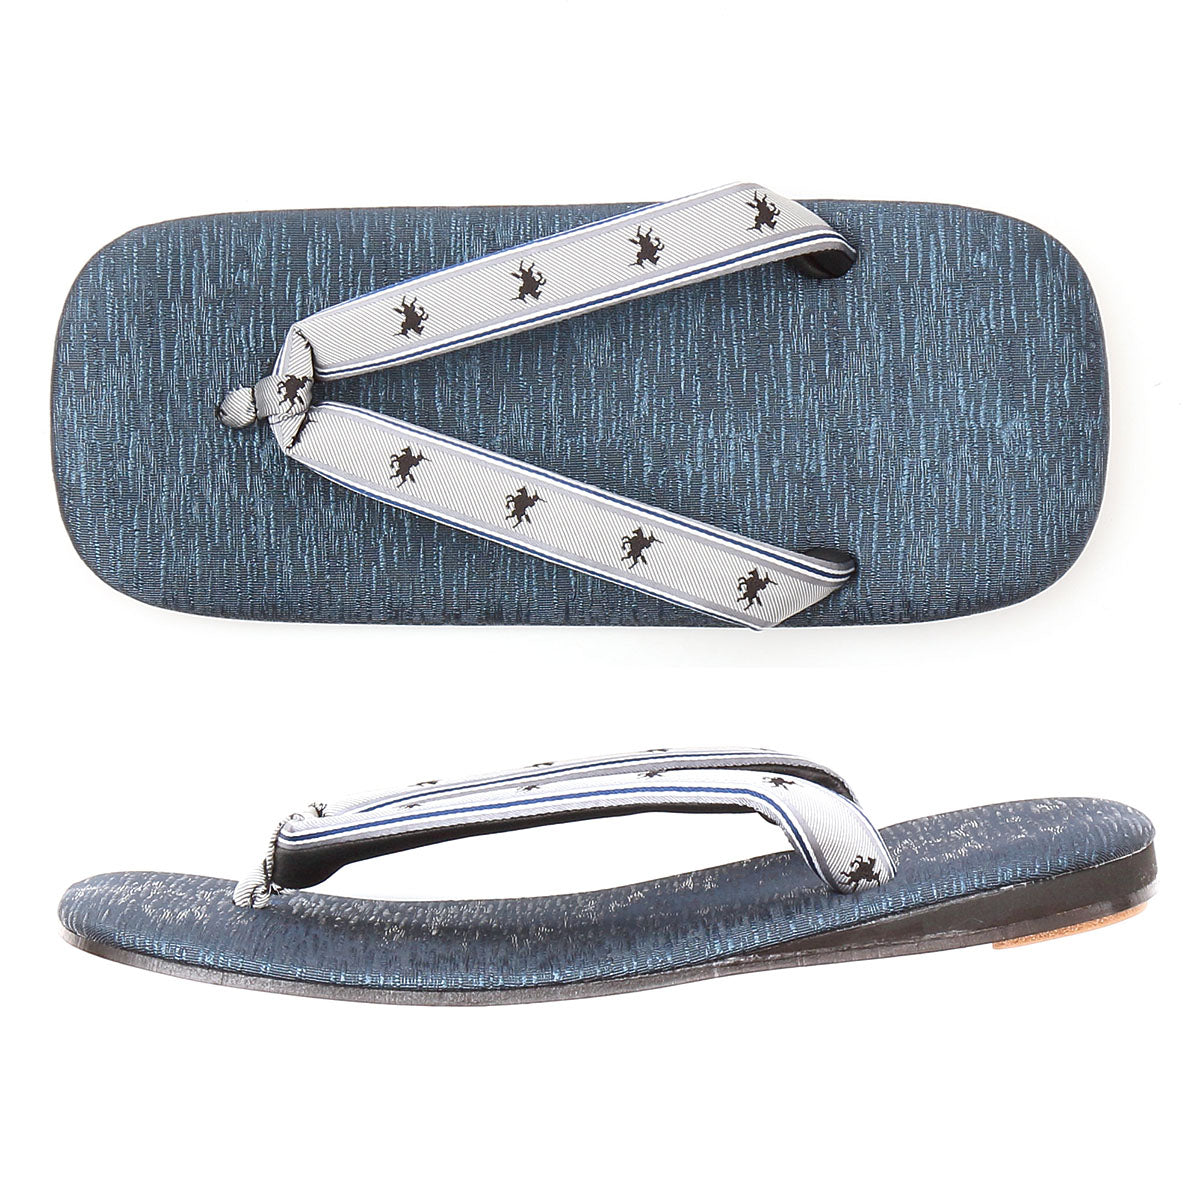 Men's Japanese Leather Soled Geta & Zori Sandals flip-flops Handmade with Silk Thongs -19. MASAMUNE FORTUNA Tokyo